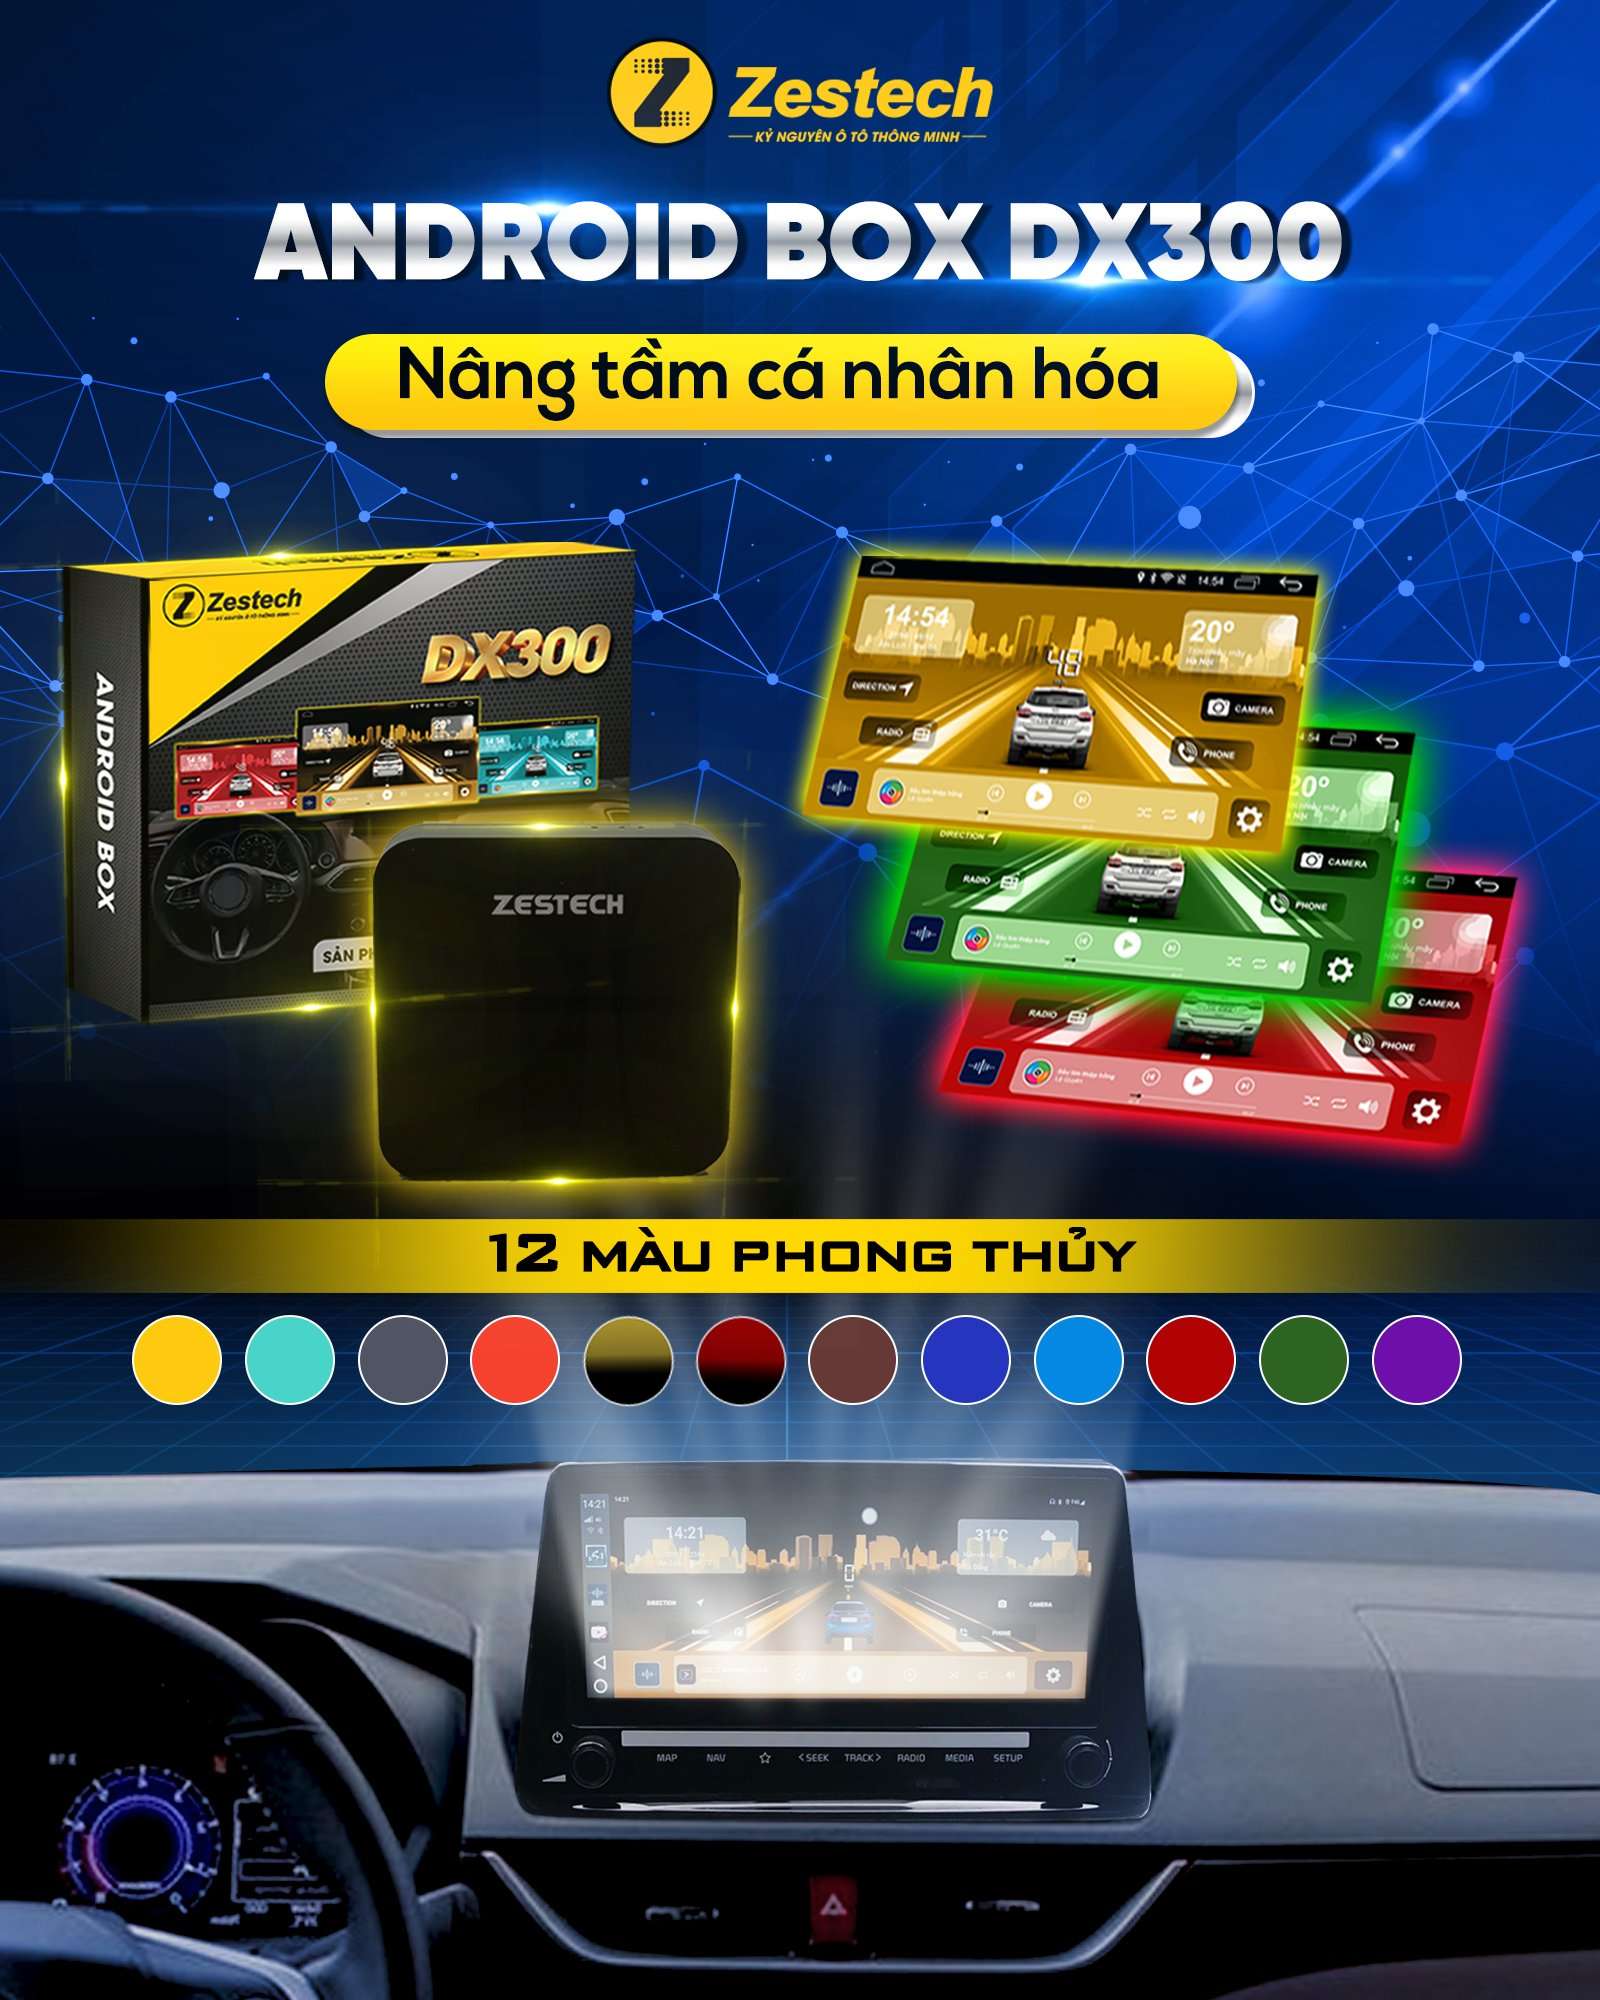 12 màu phong thủy giao diện android box zestech dx300